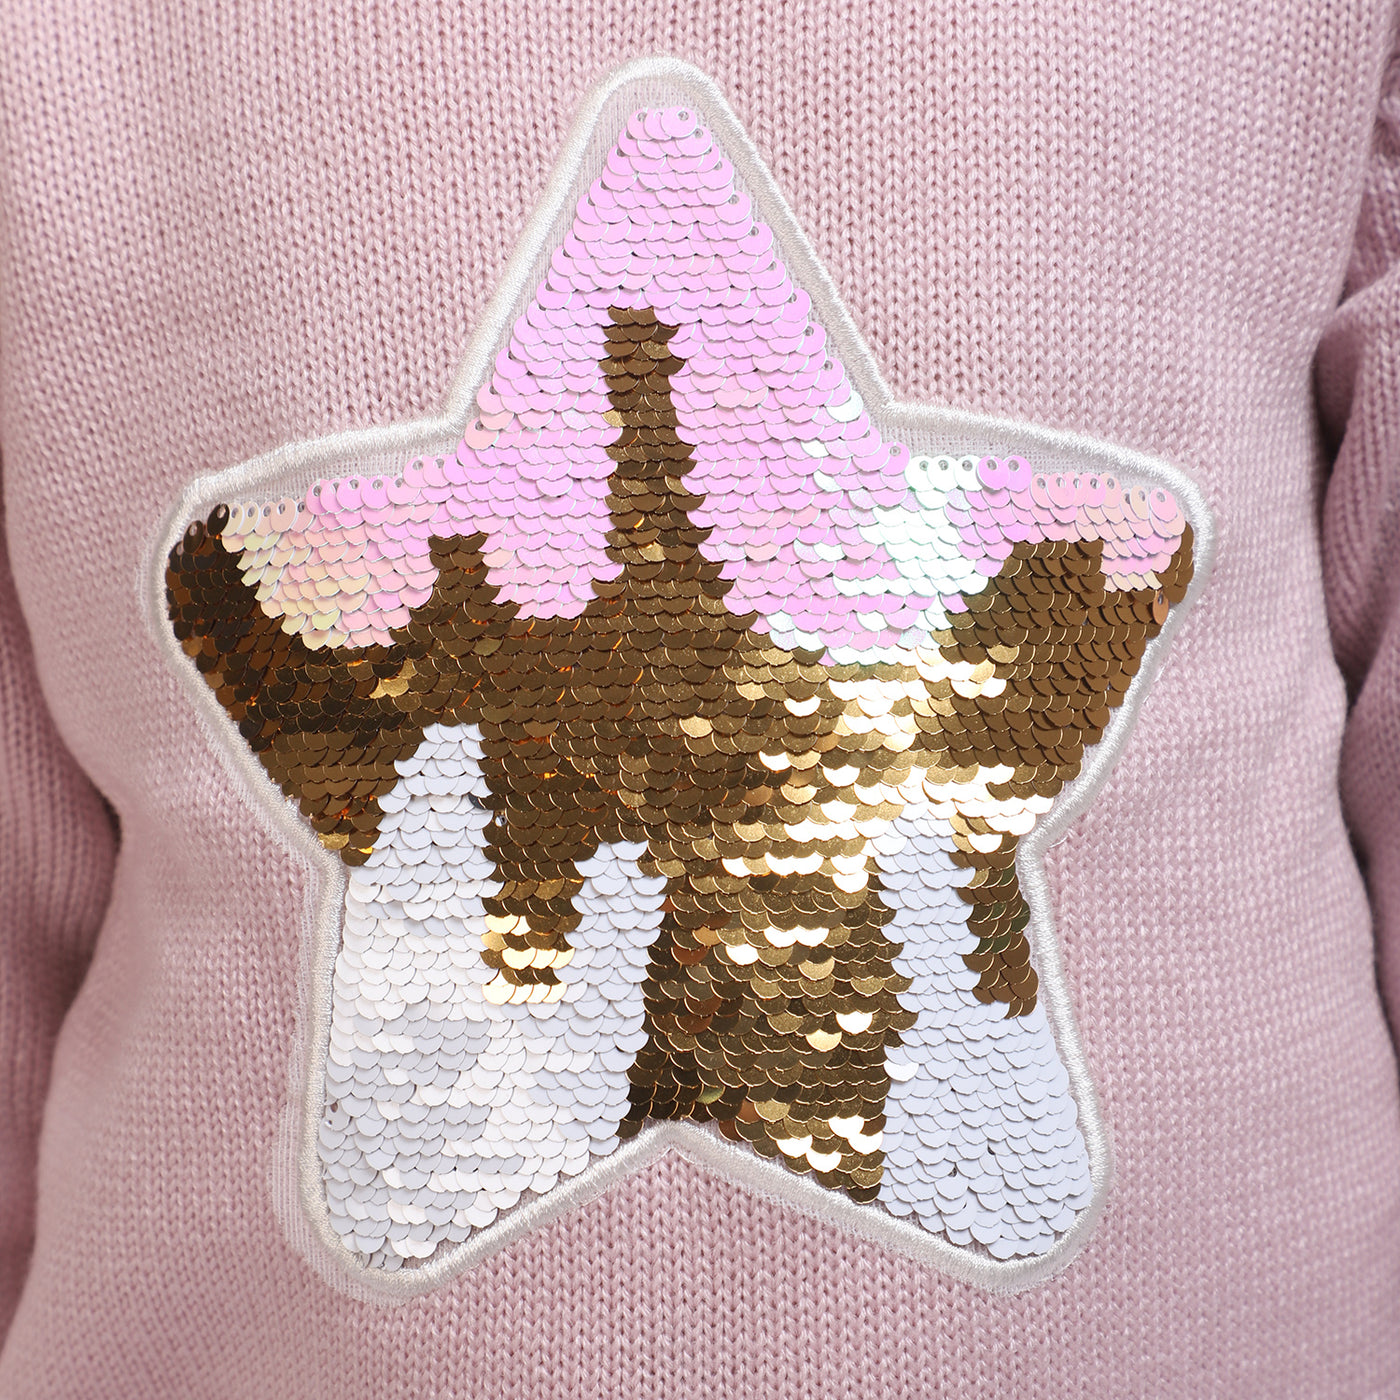 Girls Sweater -Pink